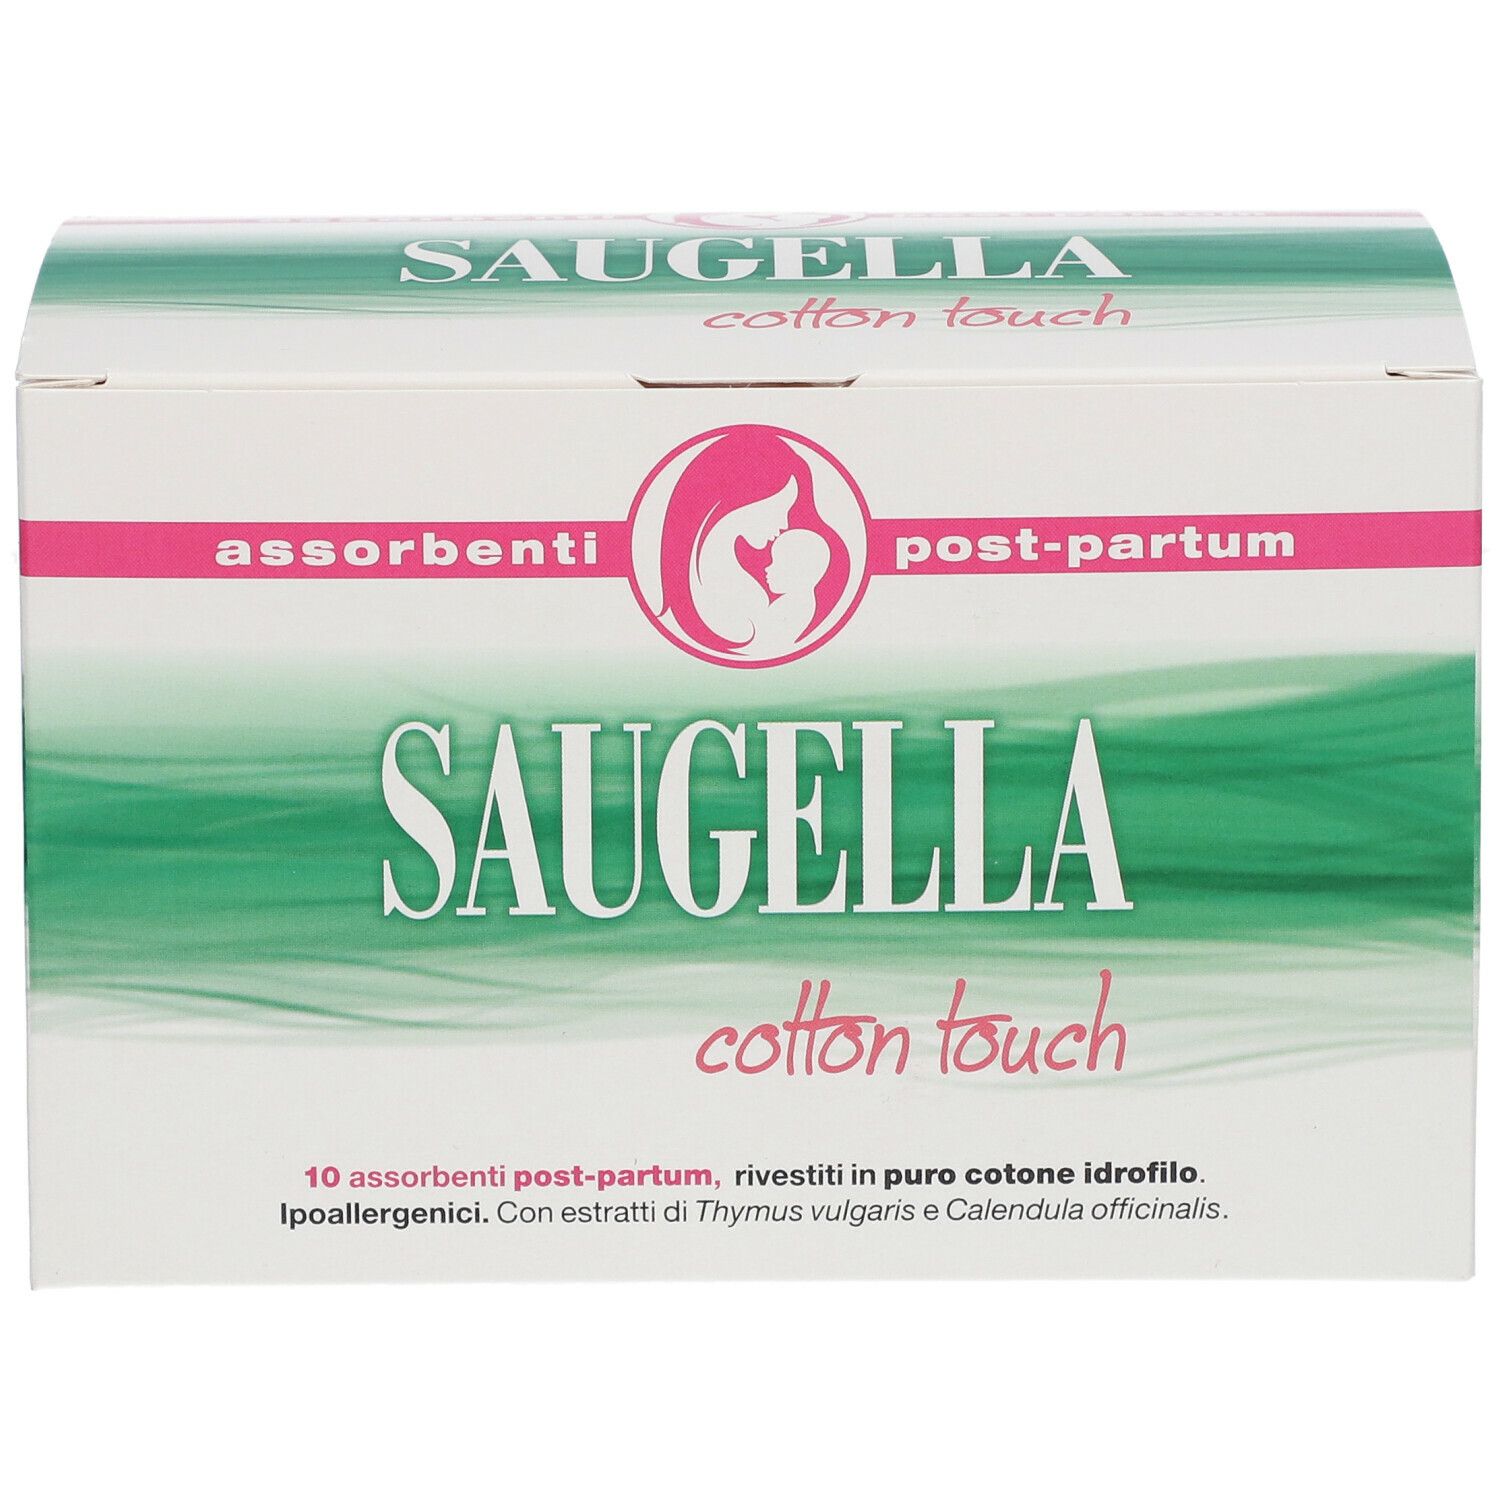 Saugella Cotton touch Assorbenti Post-Partum